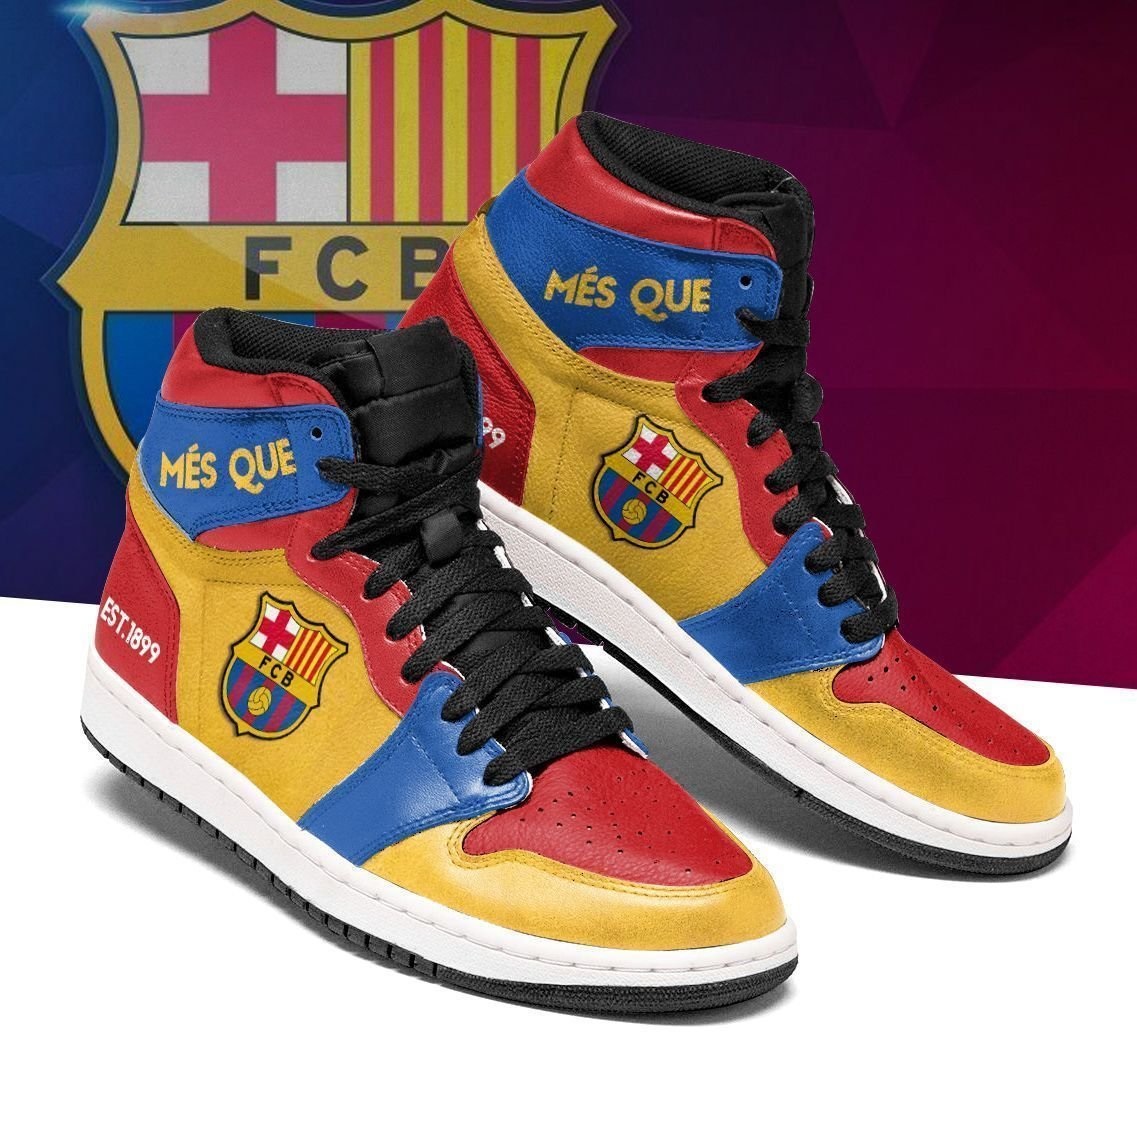 Barcelona jordan sneakers shoes